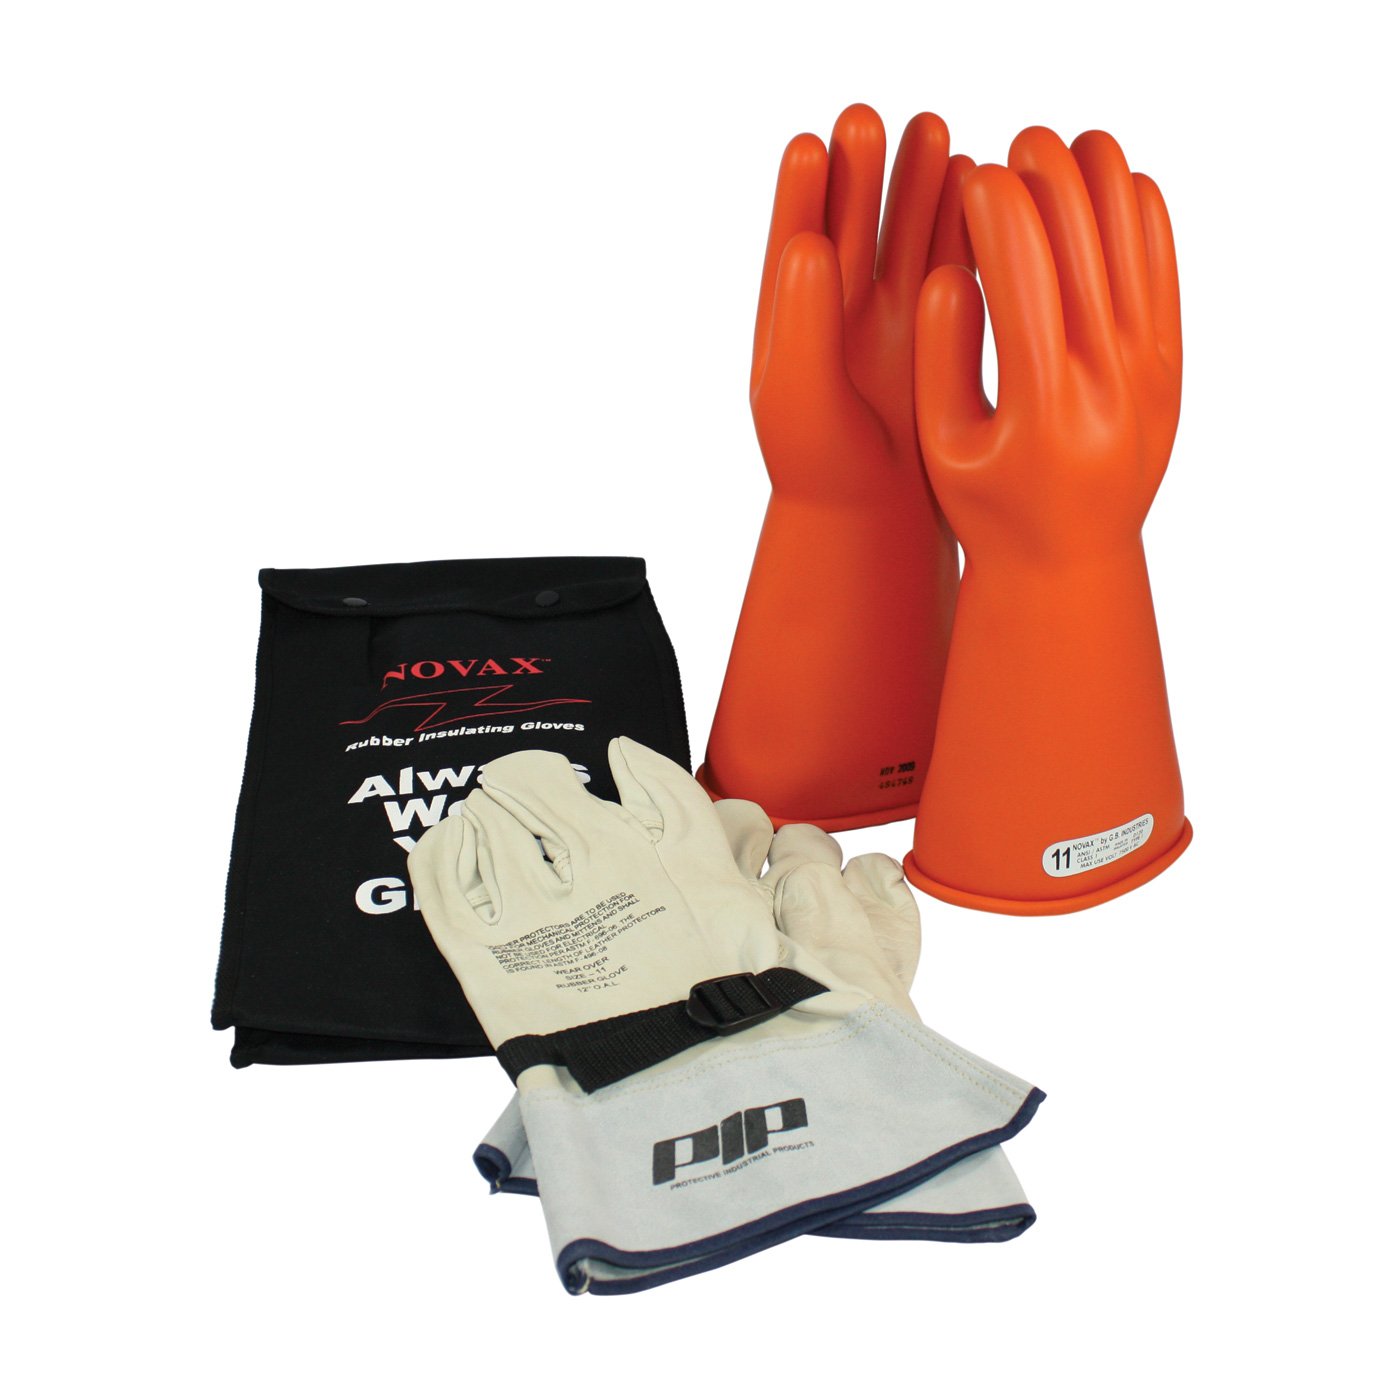 Novax™ Orange Electrical Safety Kits, Class 1